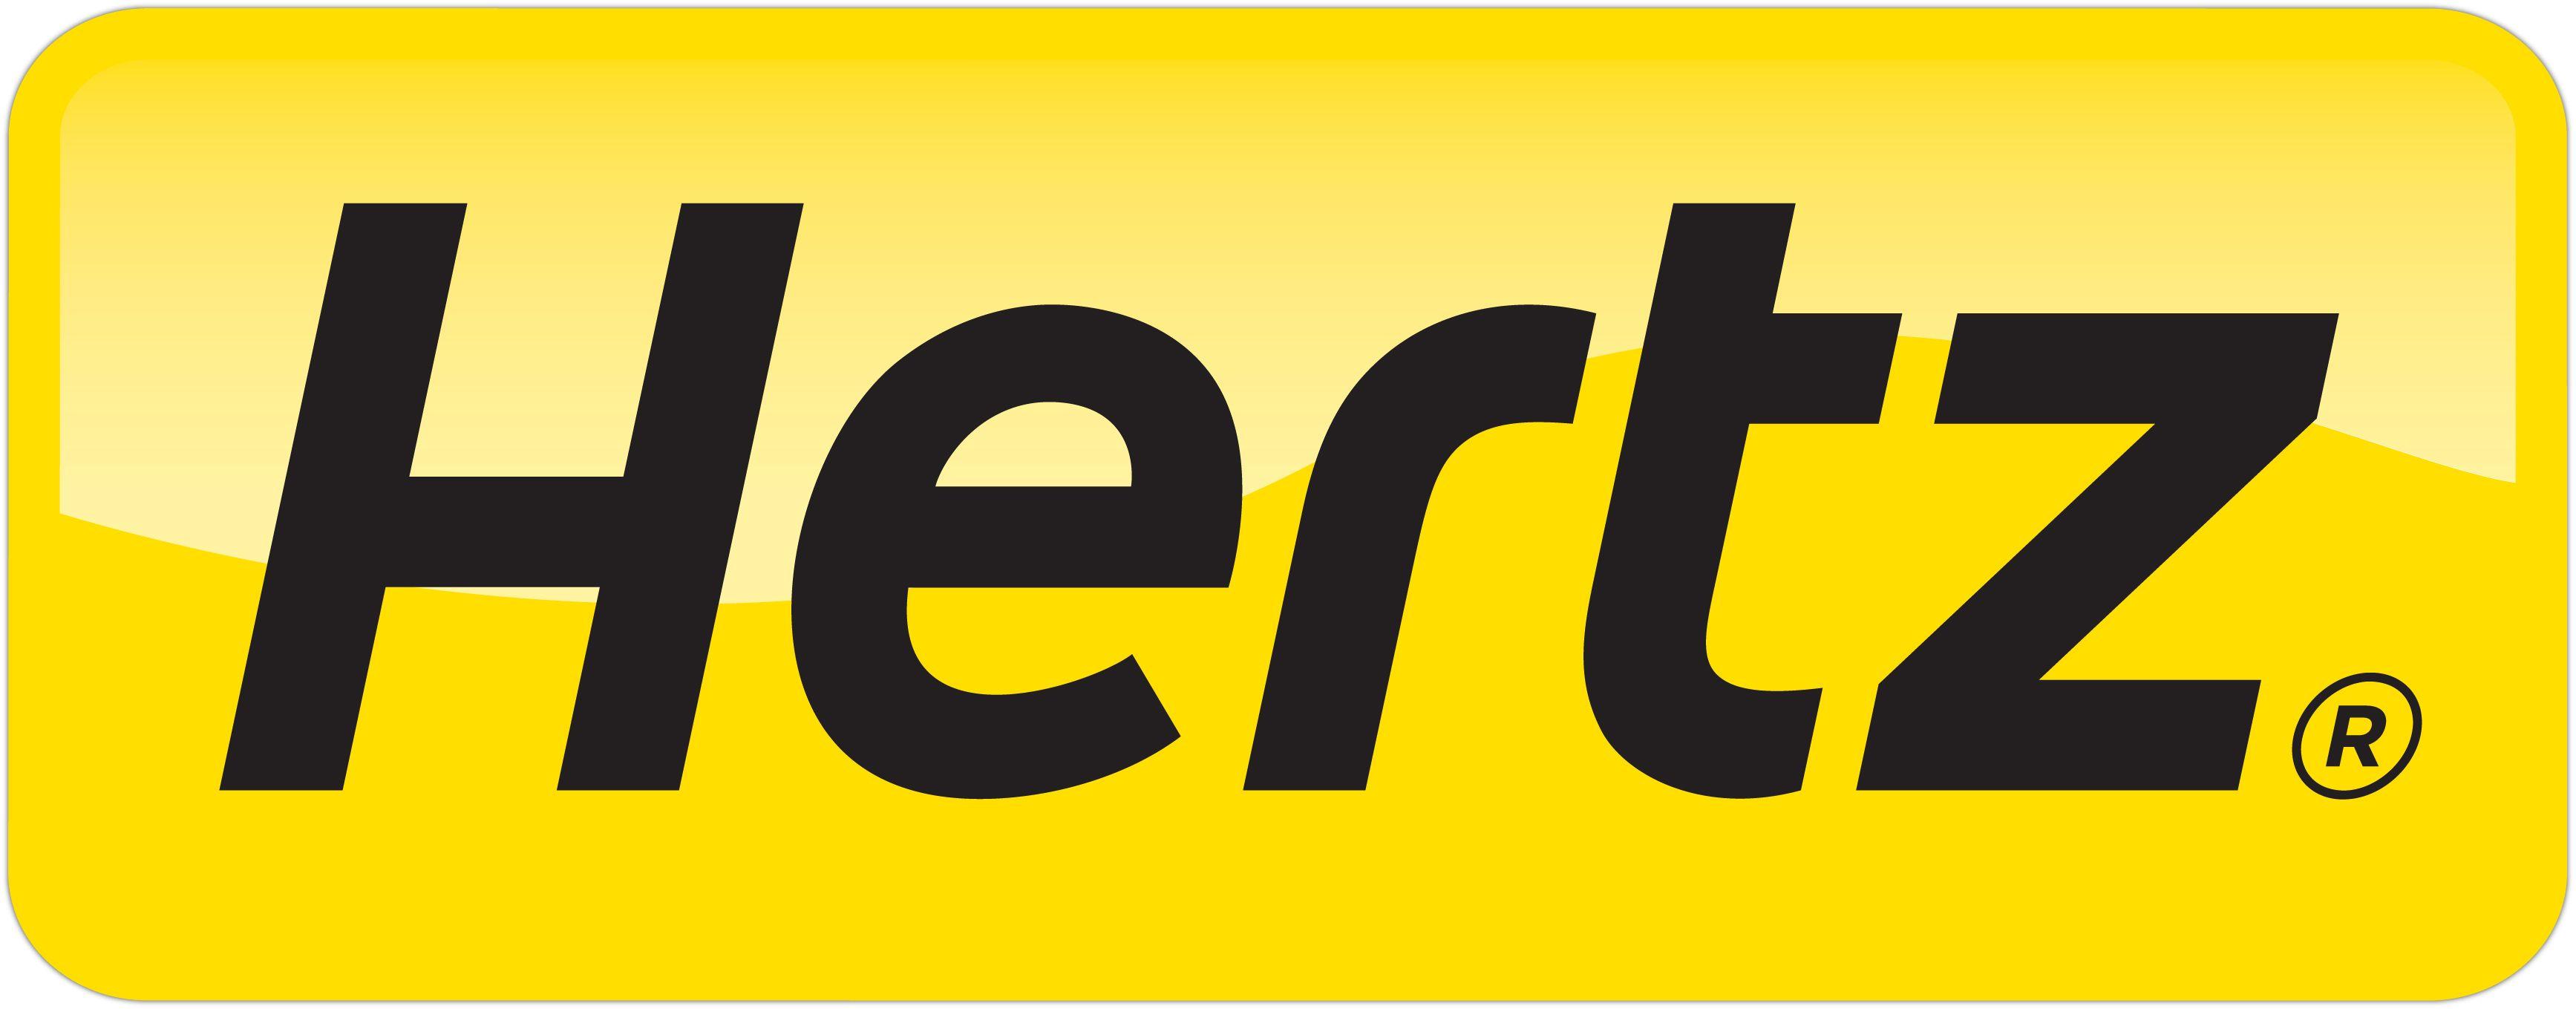 American Rental Car Company Logo - Car rental | Grenoble Alpes Isère Airport